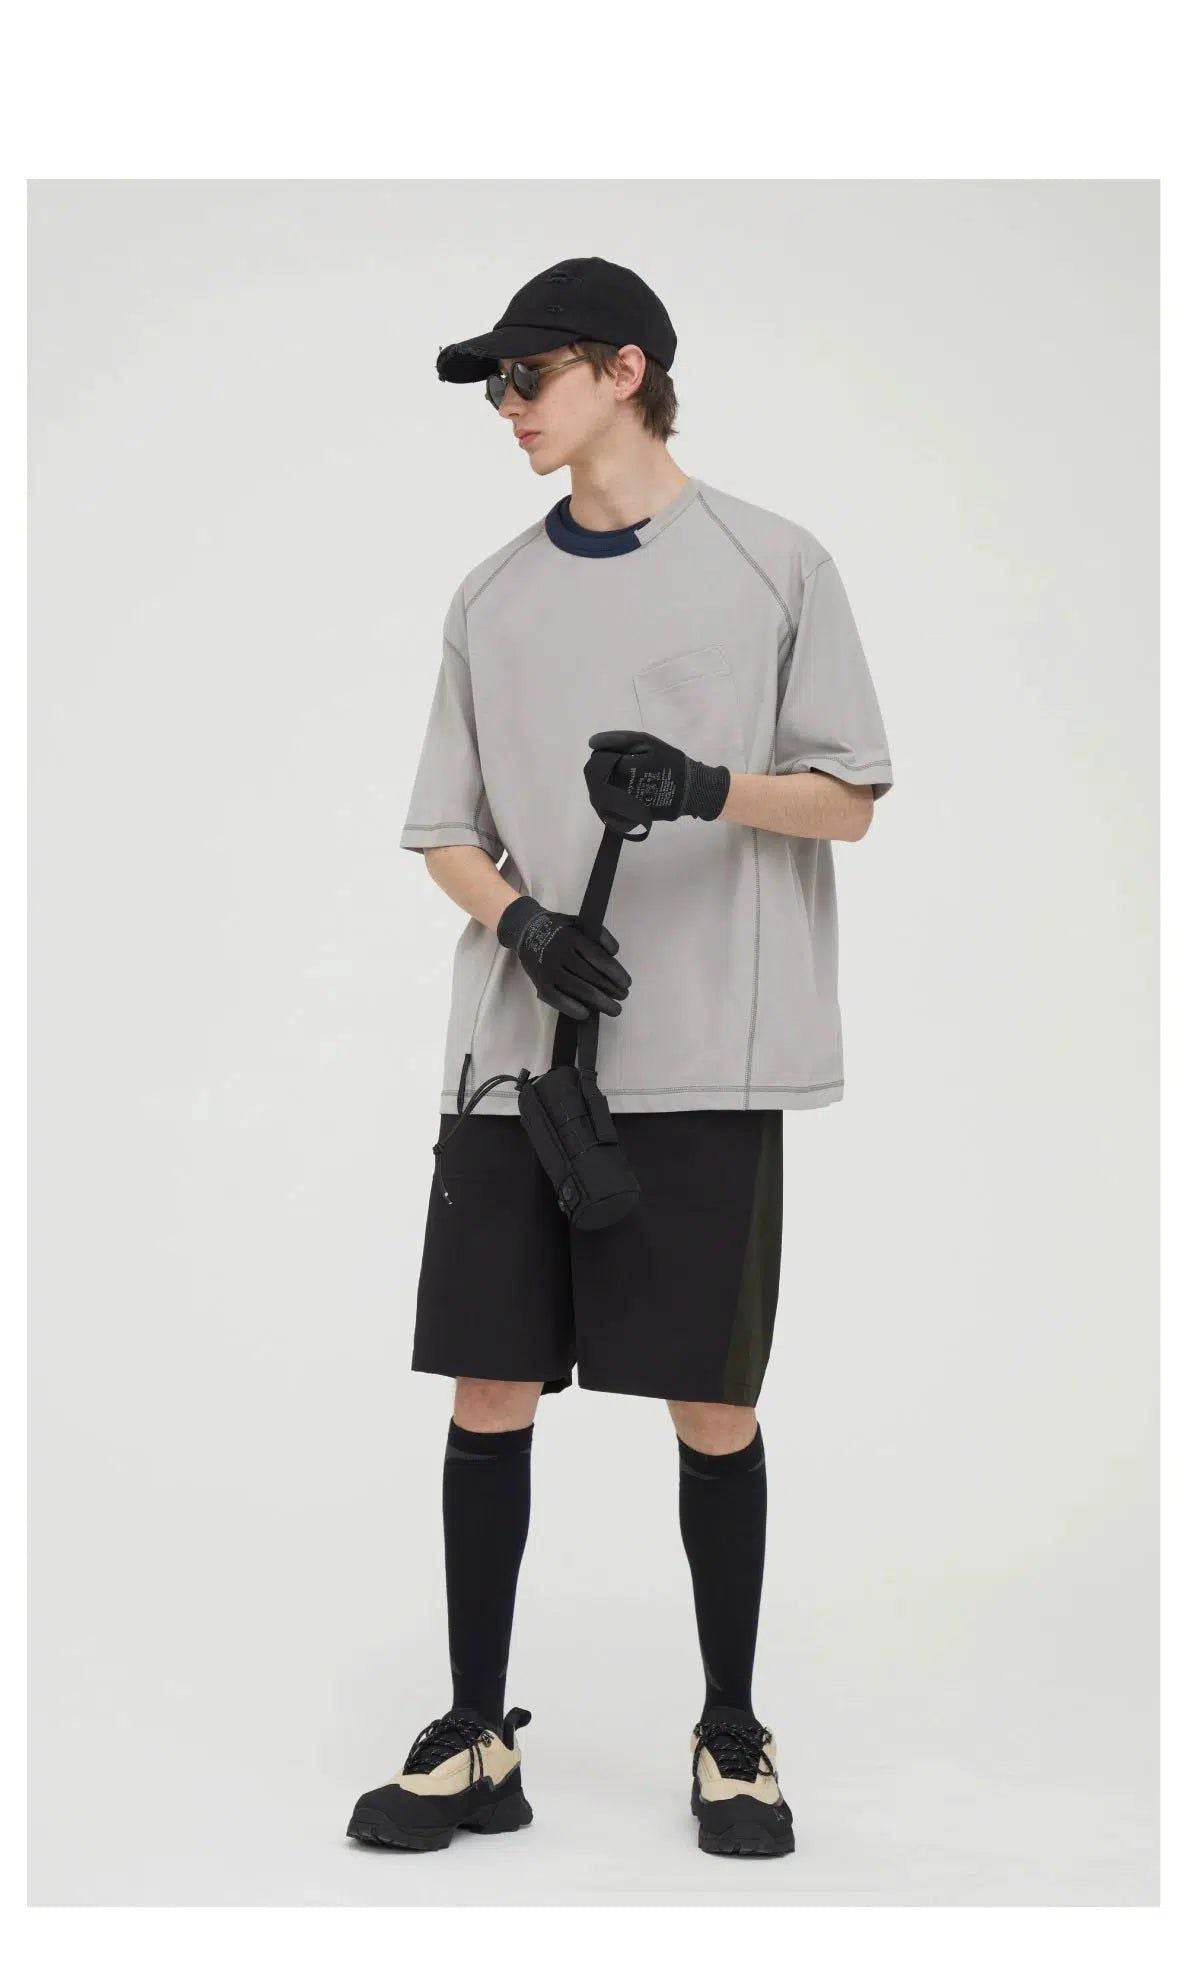 Slant Pocket Casual T-Shirt Korean Street Fashion T-Shirt By Decesolo Shop Online at OH Vault